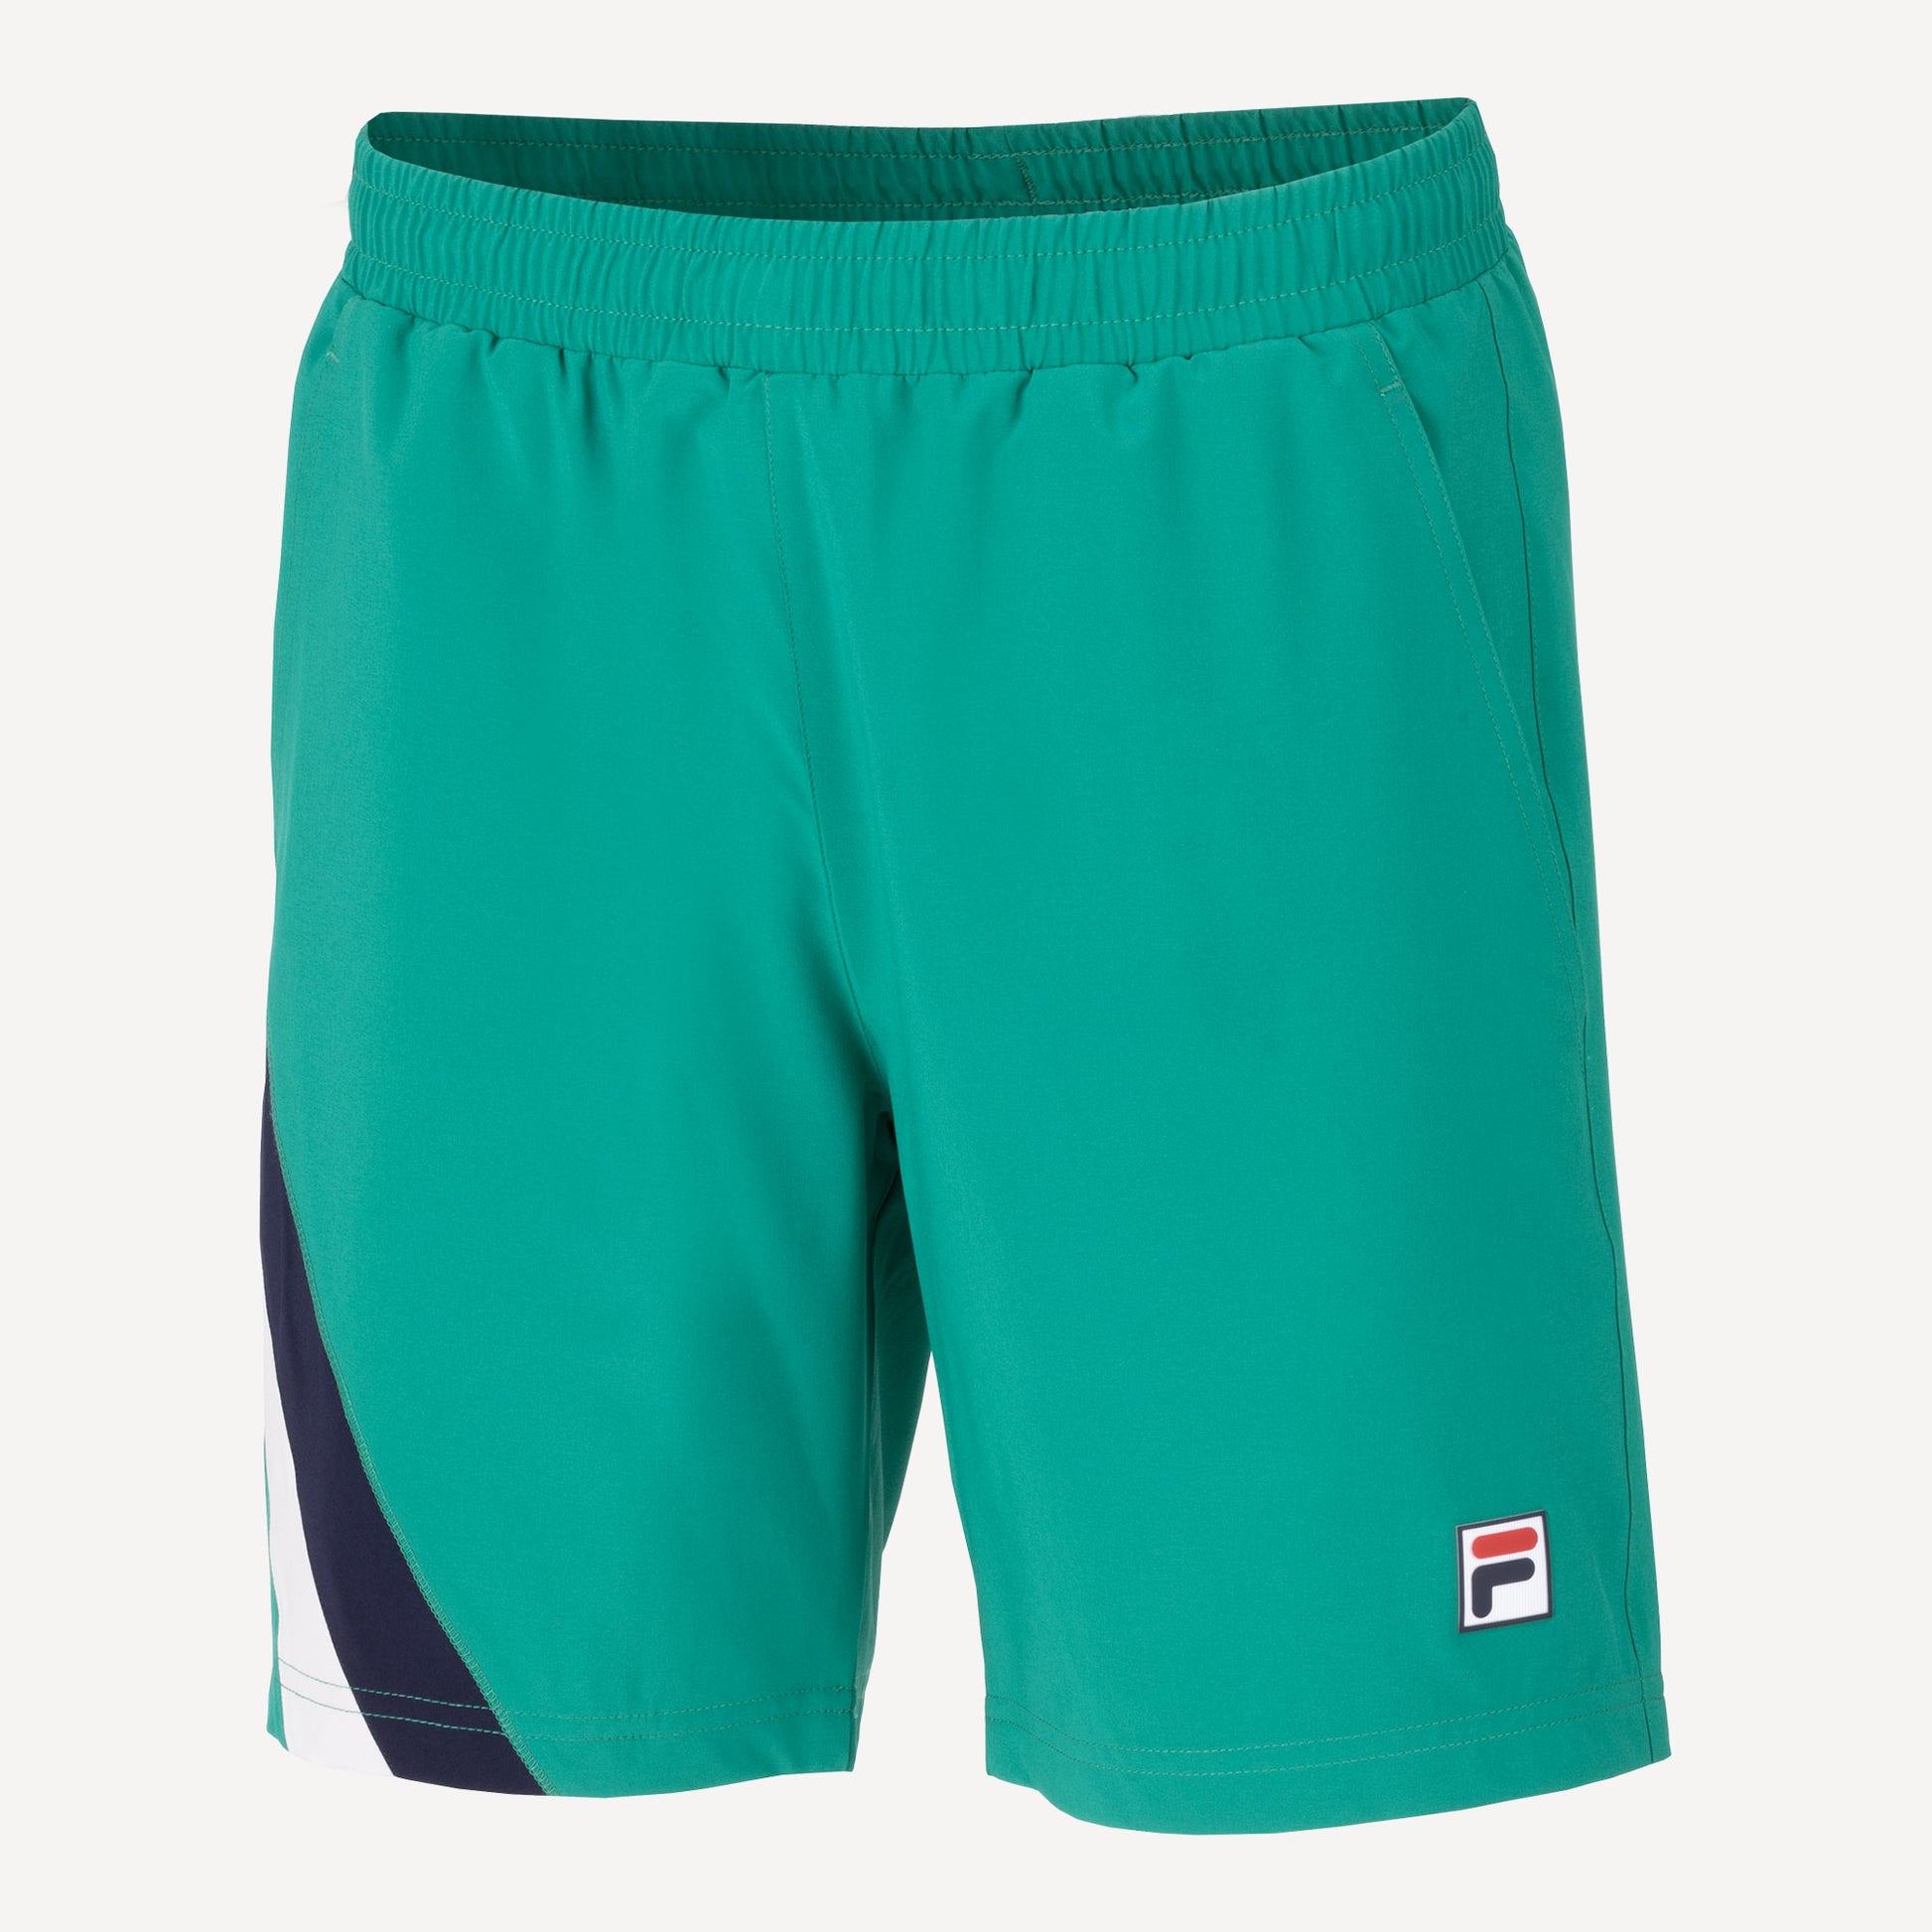 Fila Amari Men's Tennis Shorts Green (1)